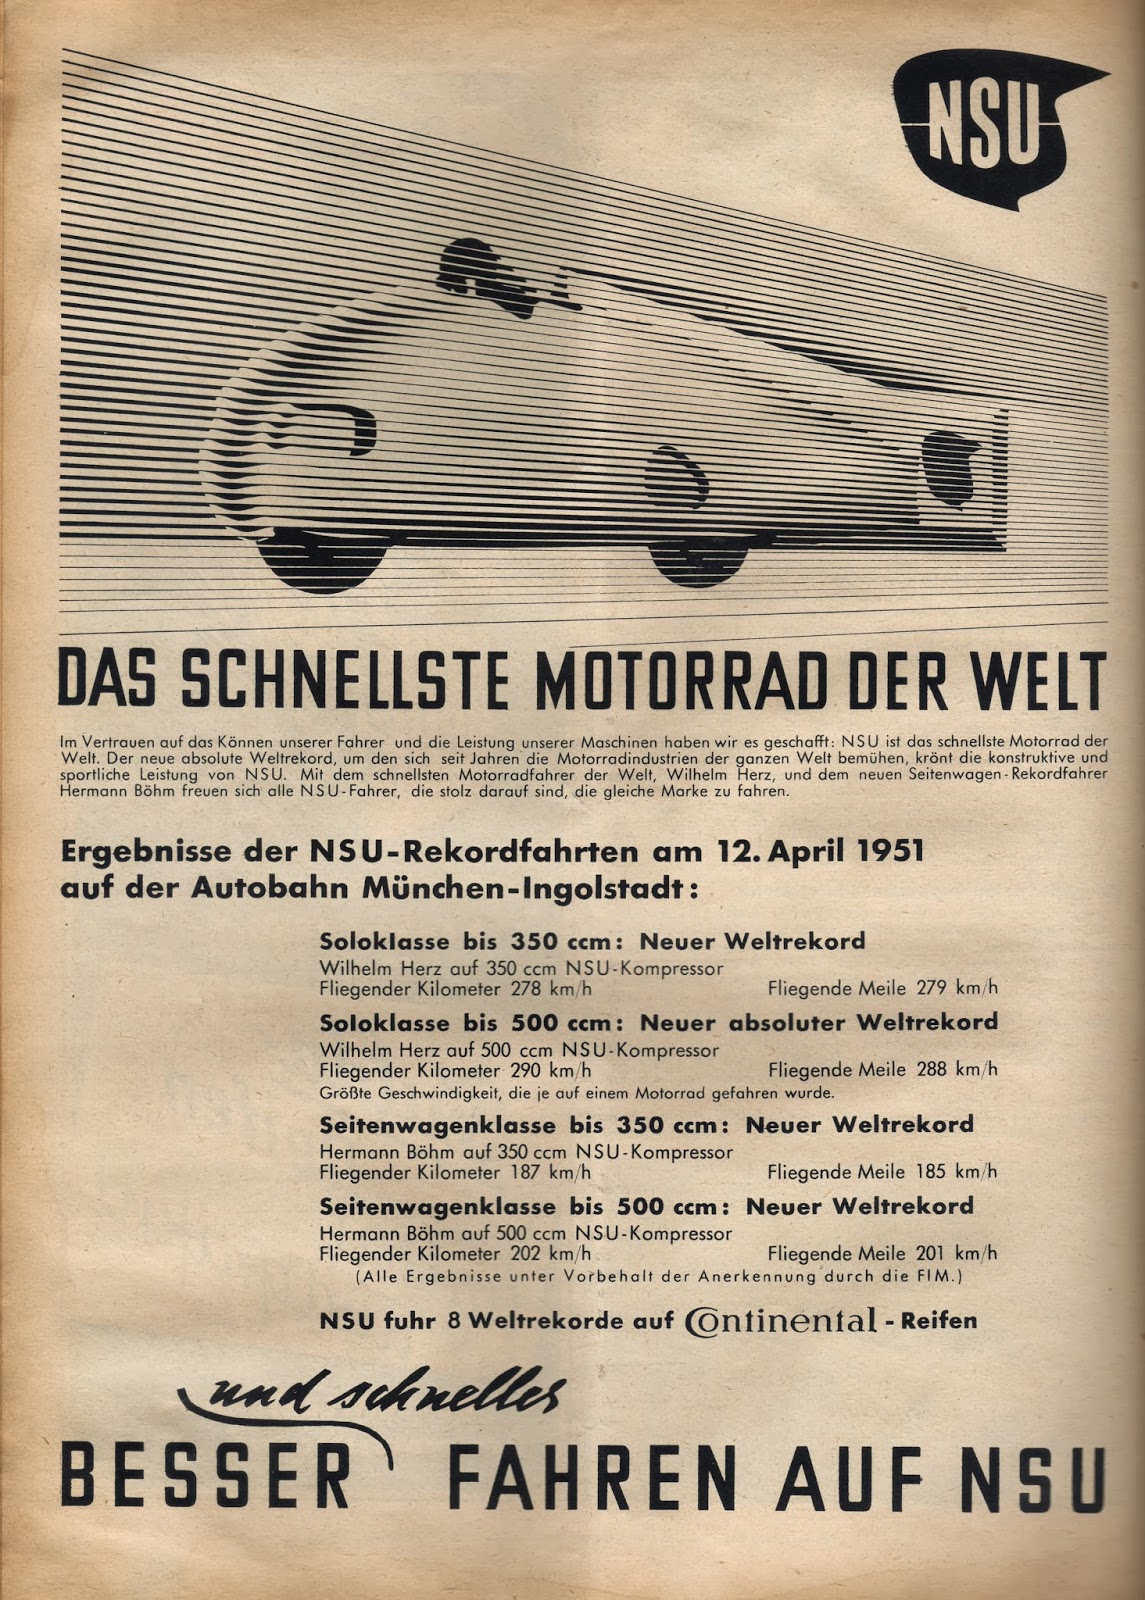 Zeitschrift Neues Kraftfahrzeug Fachblatt 20/1950 Test NSU Viergang Fox Bmw 328 